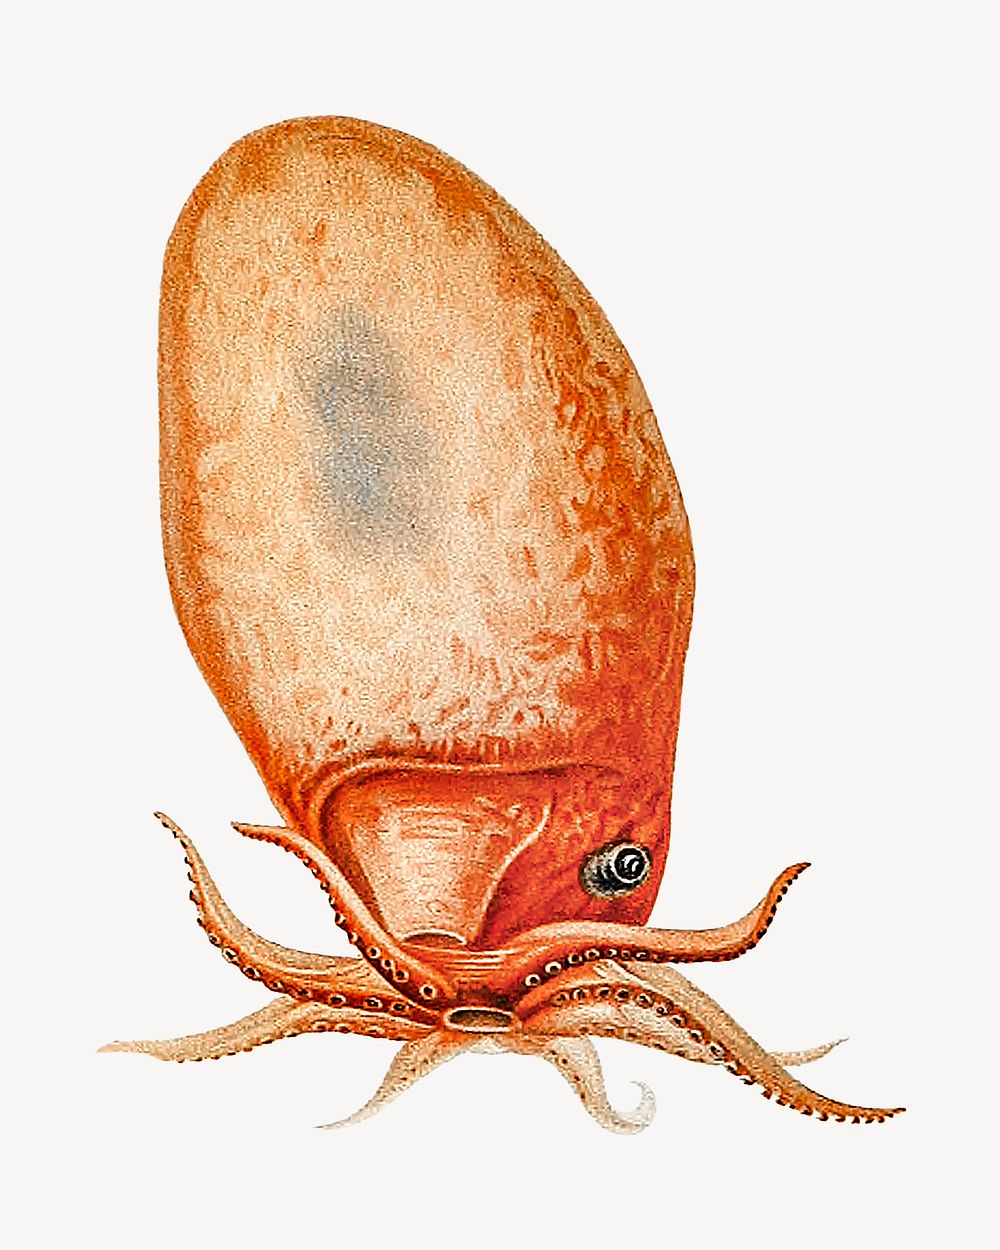 Vintage bolitaena octopus illustration